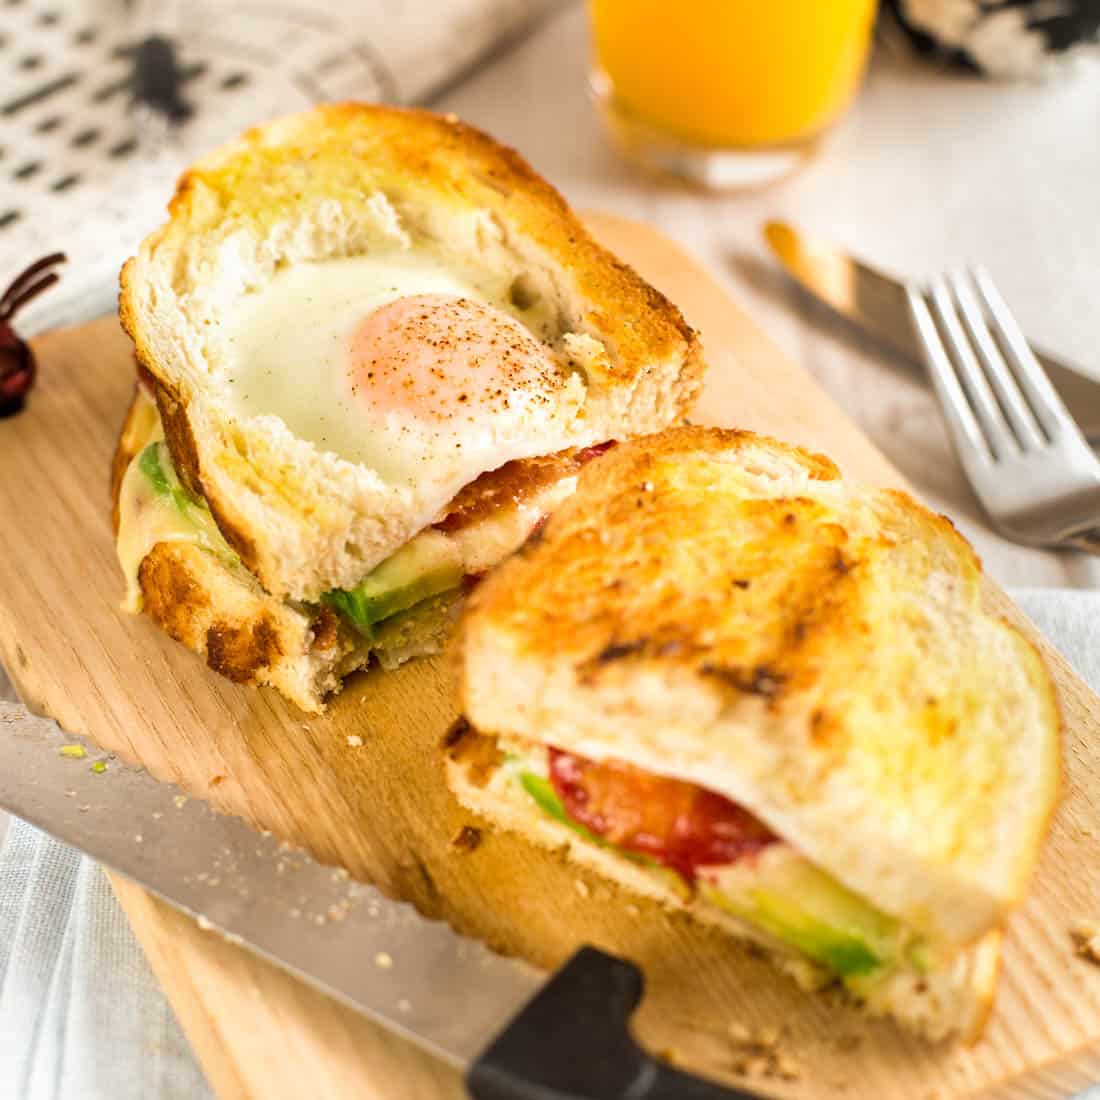 https://www.easycheesyvegetarian.com/wp-content/uploads/2021/11/egg-in-a-hole-breakfast-sandwiches-featured-1.jpg